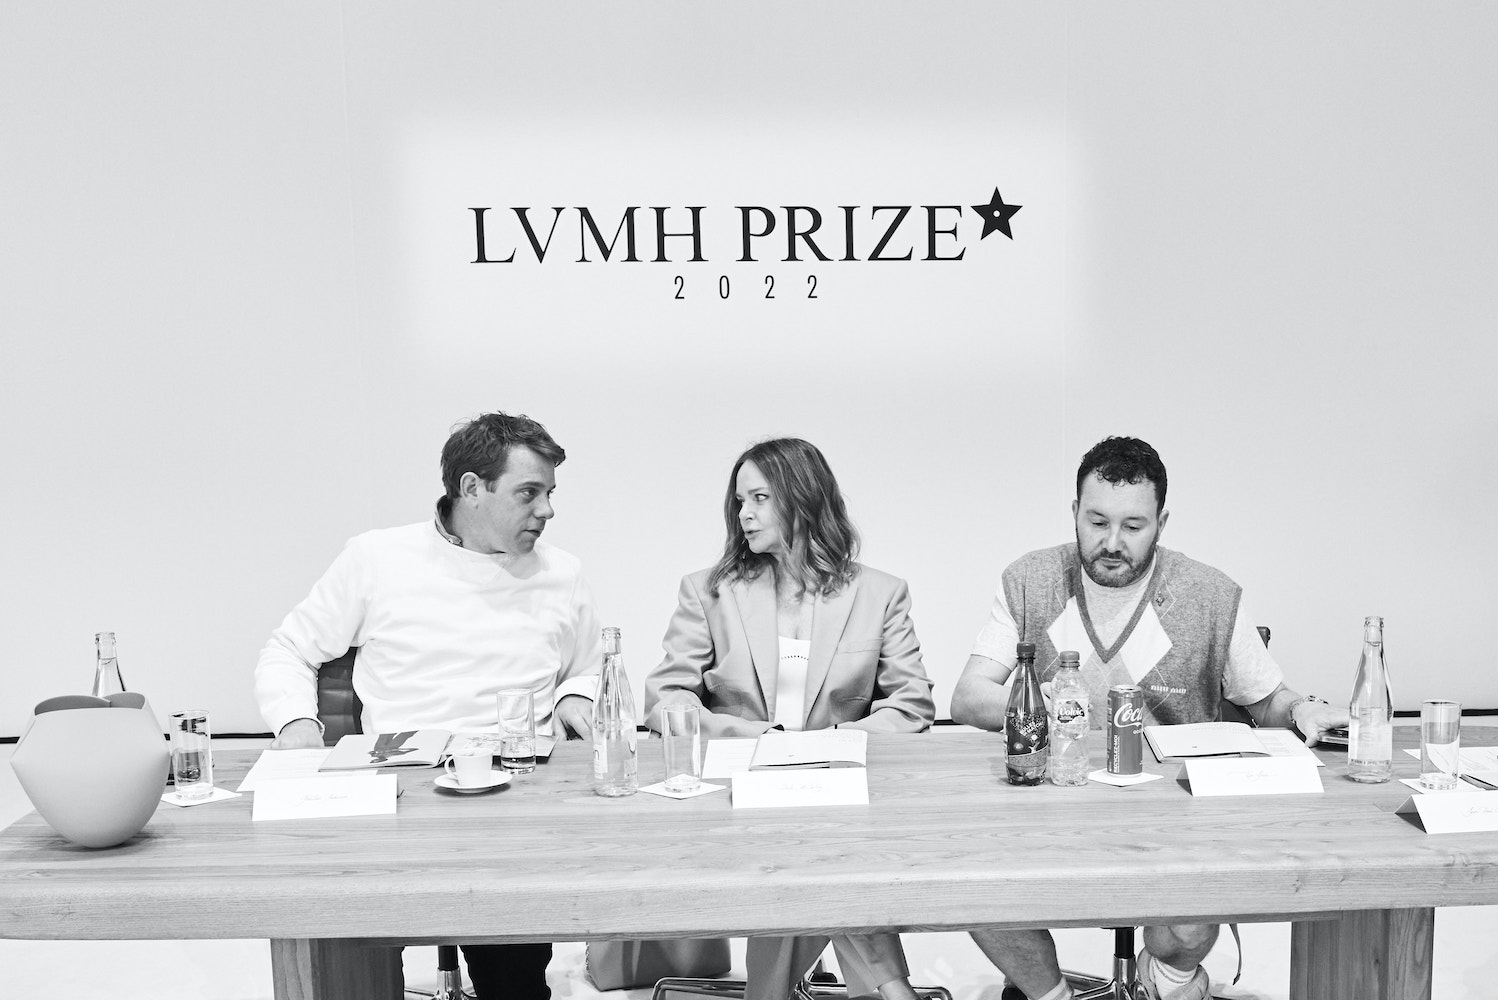 LVMH Prize 2022, photo by Saskia Lawaks